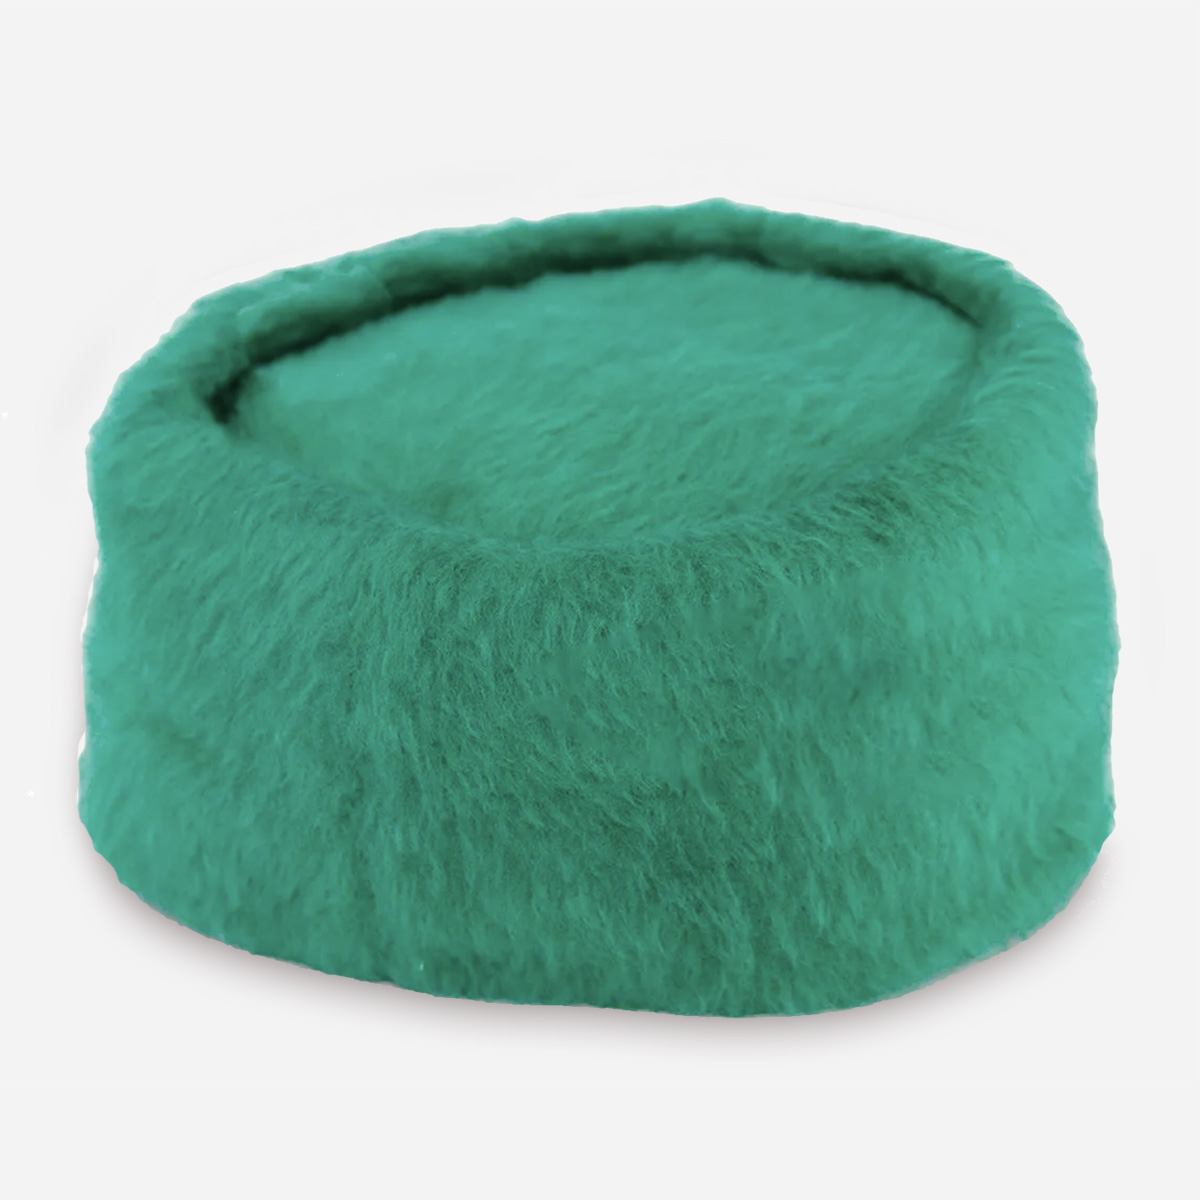 green pillbox hat